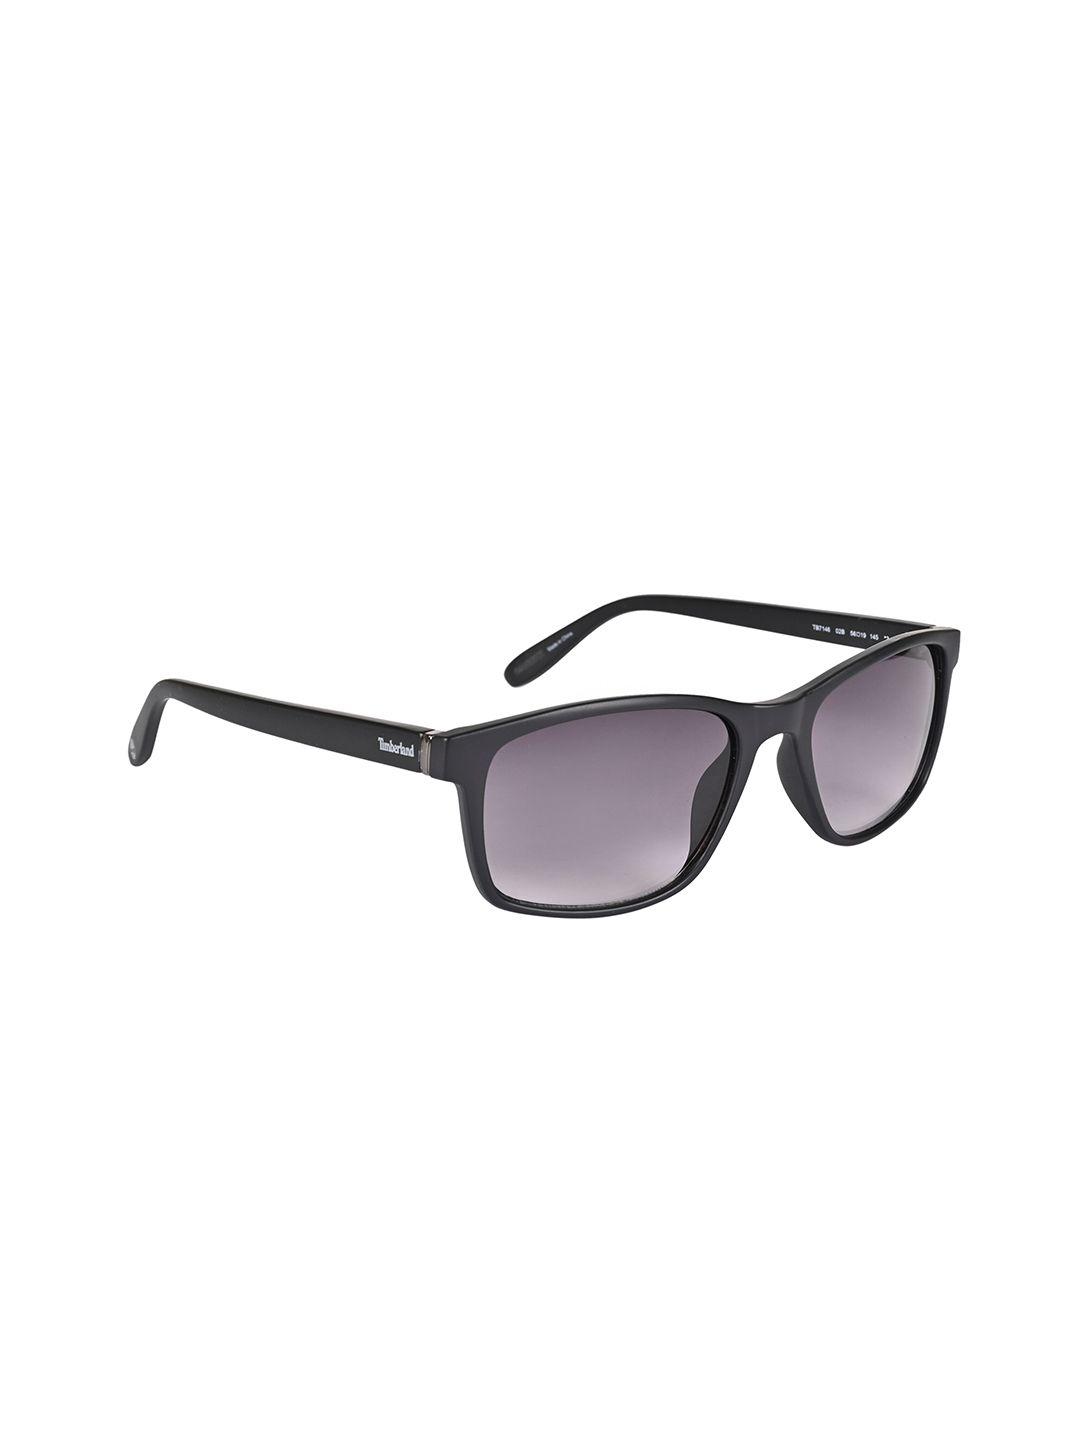 timberland-men-uv-protective-lens-square-sunglasses-tb7146-56-02b